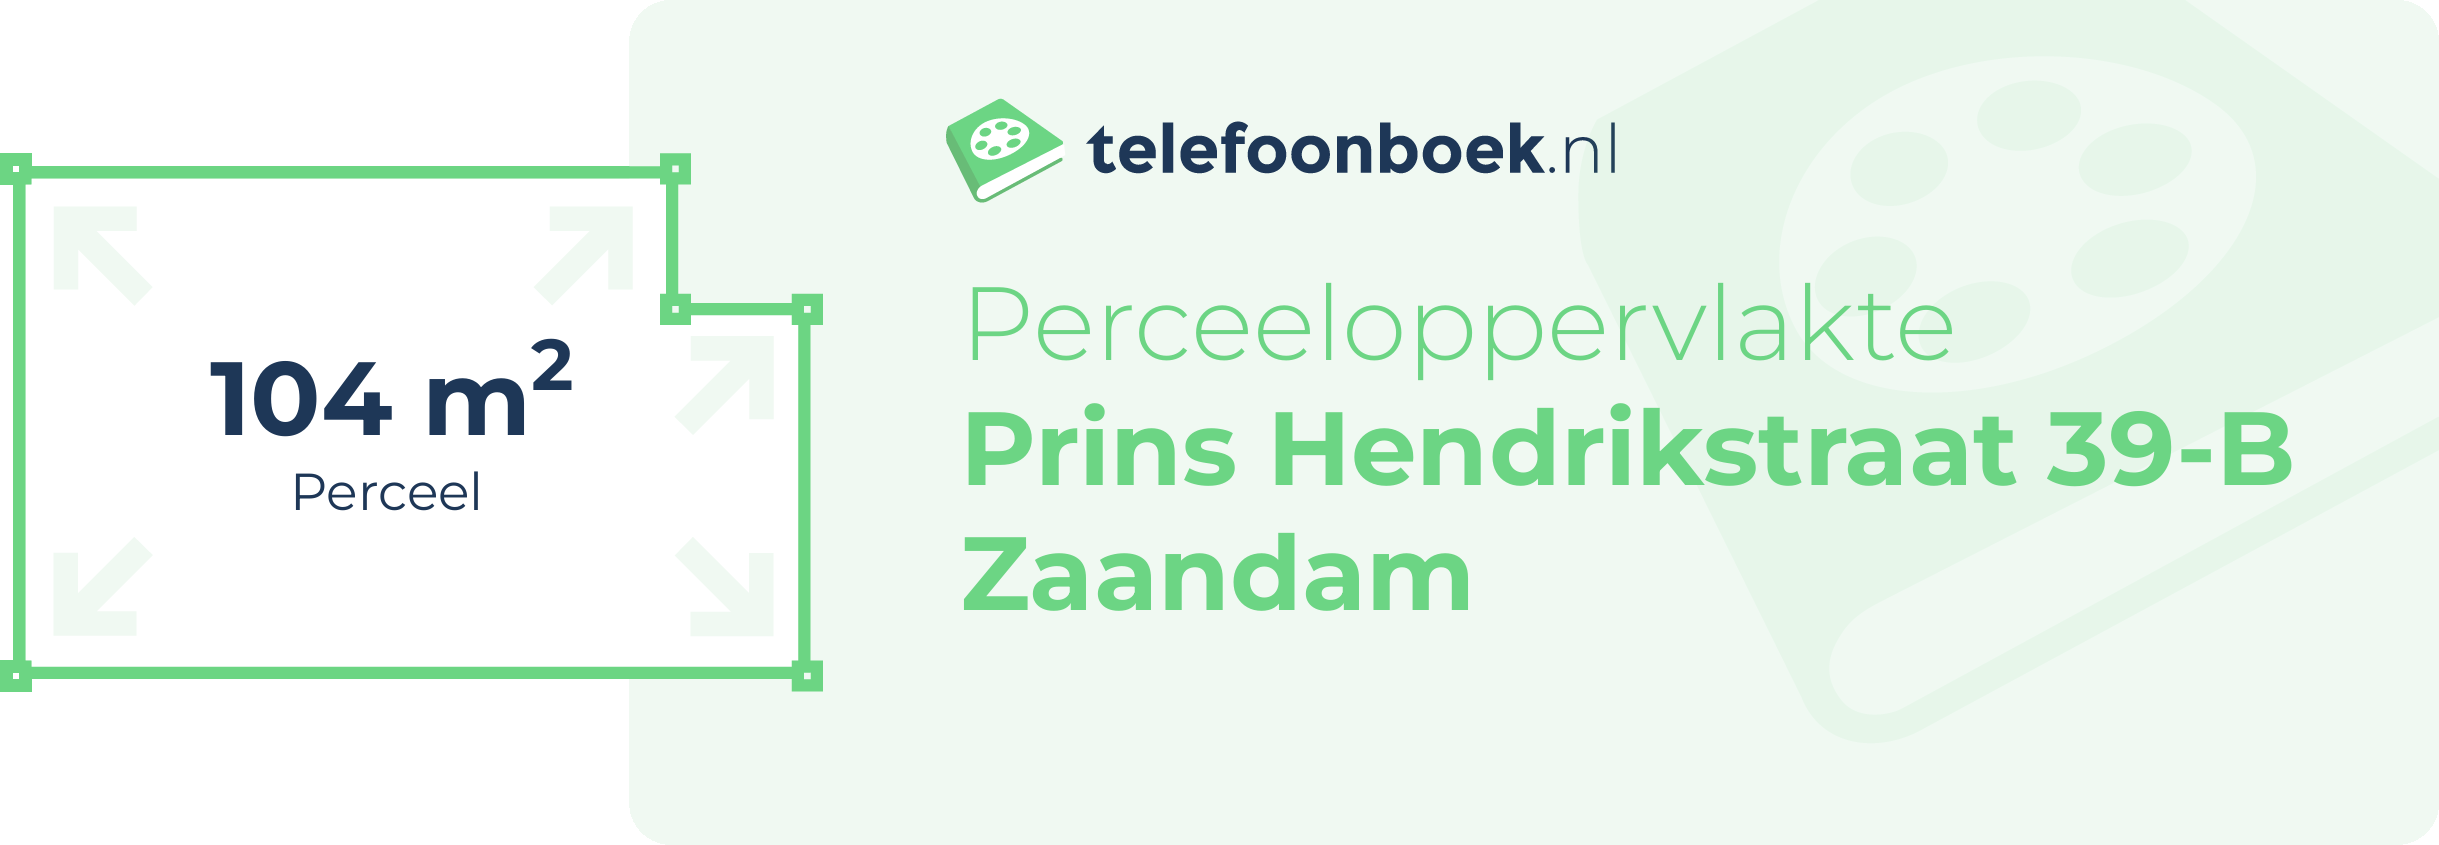 Perceeloppervlakte Prins Hendrikstraat 39-B Zaandam